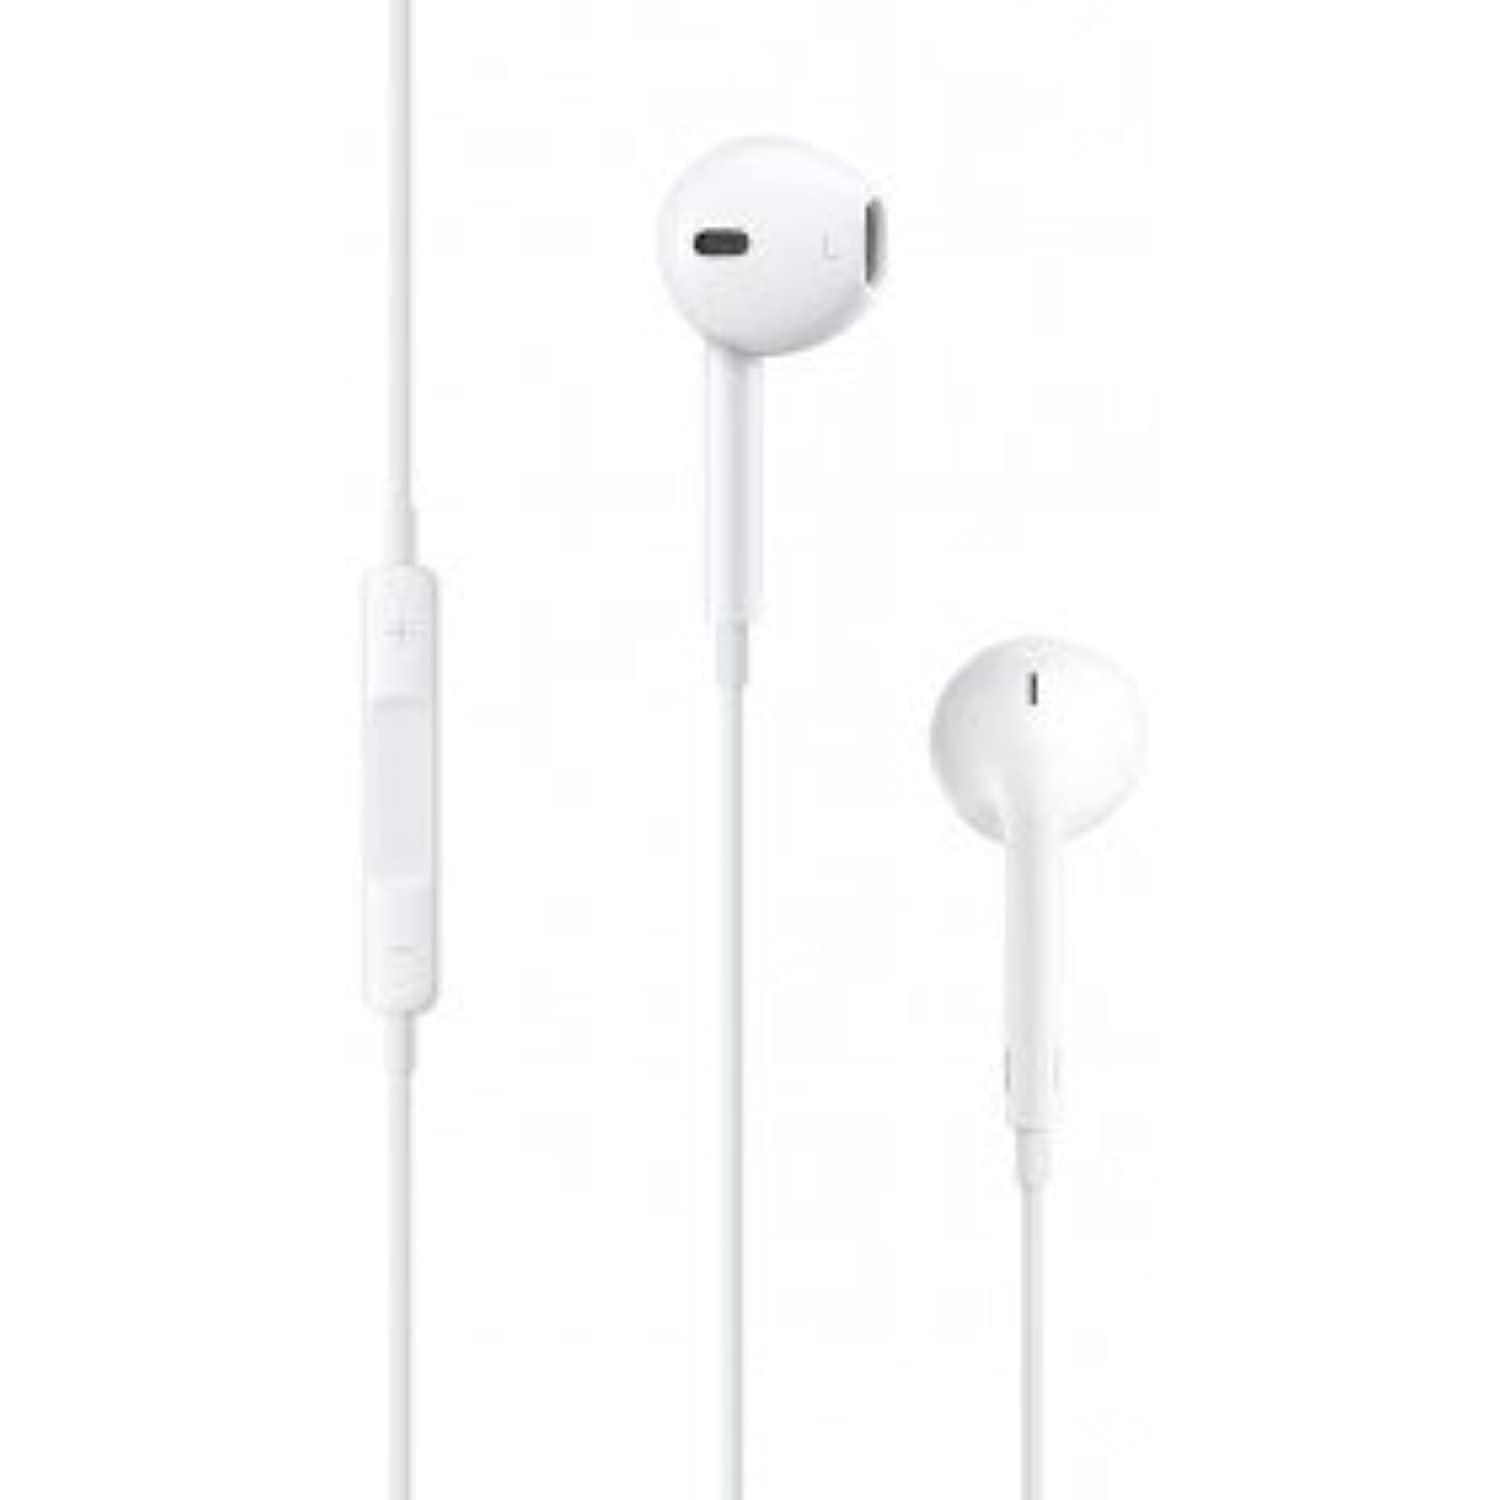 Apple EarPods with 3.5mm Headphone Plug